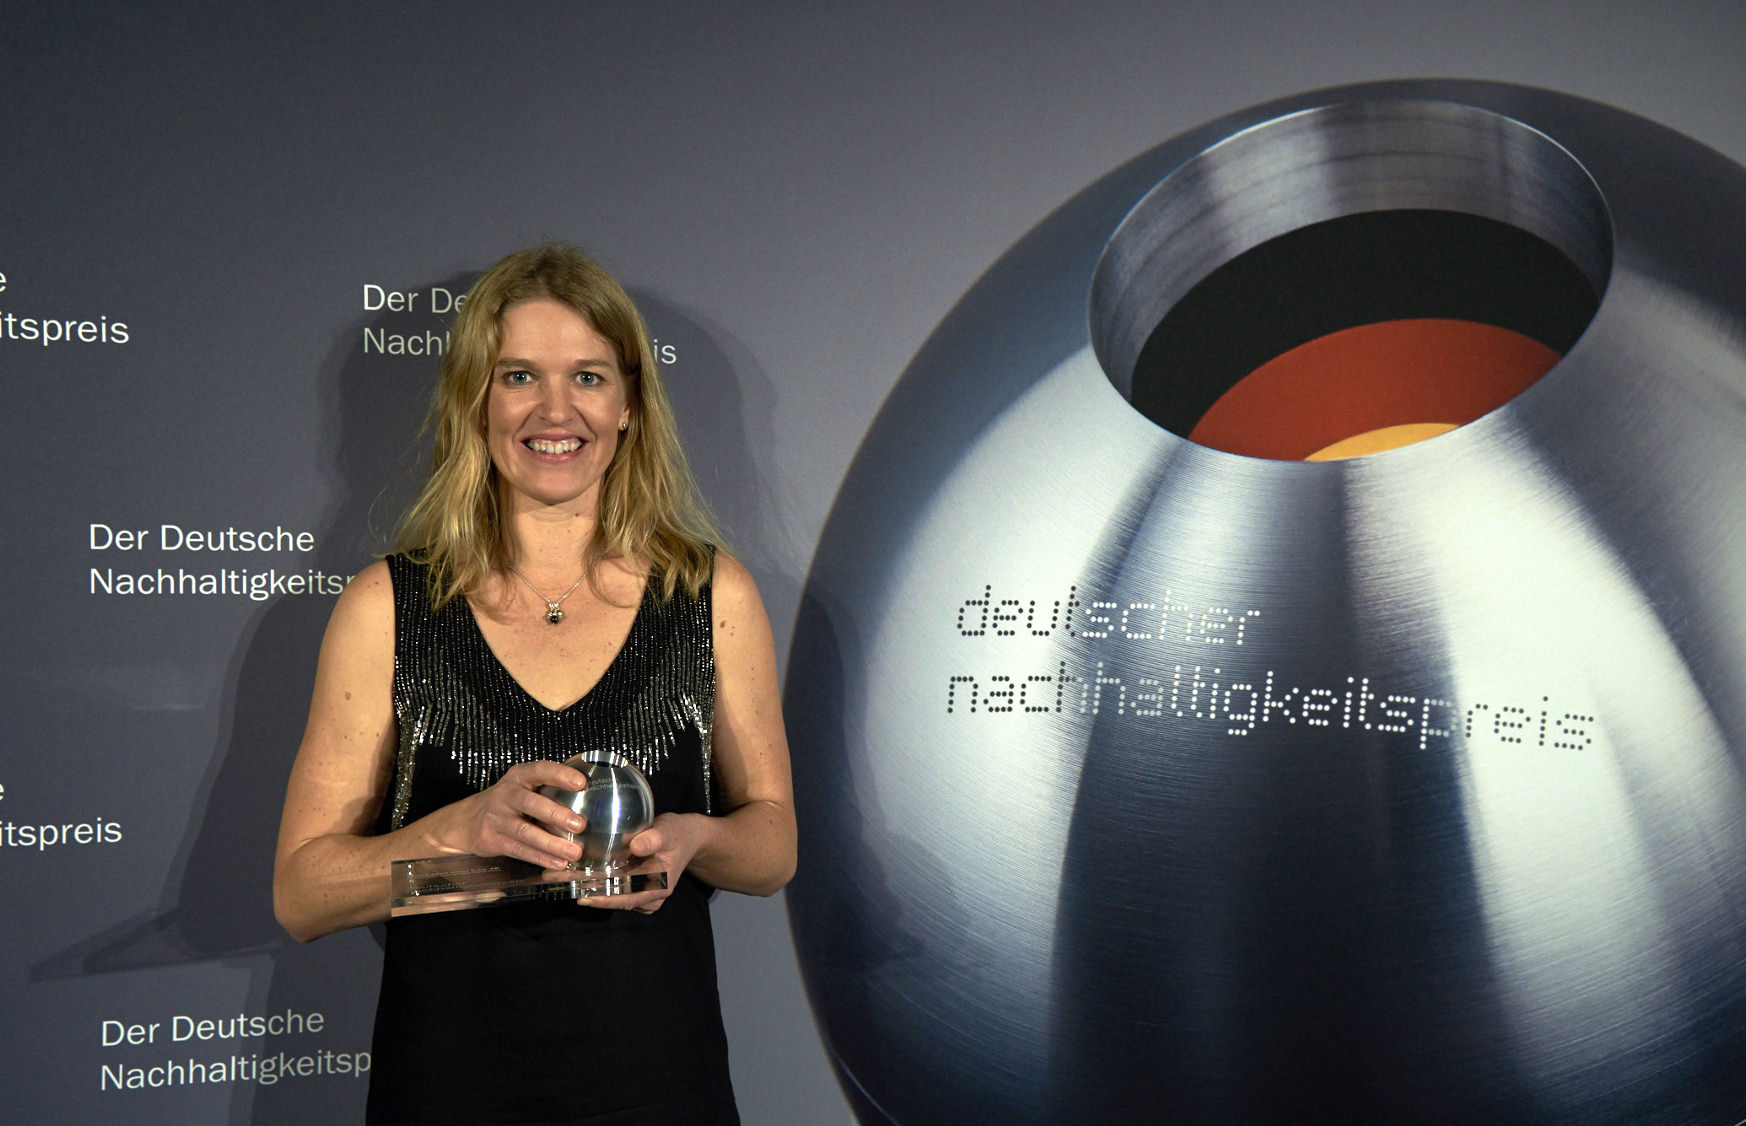 Antje von Dewitz with the German Sustainability Award 2015 - Photographer: Frank Fendler